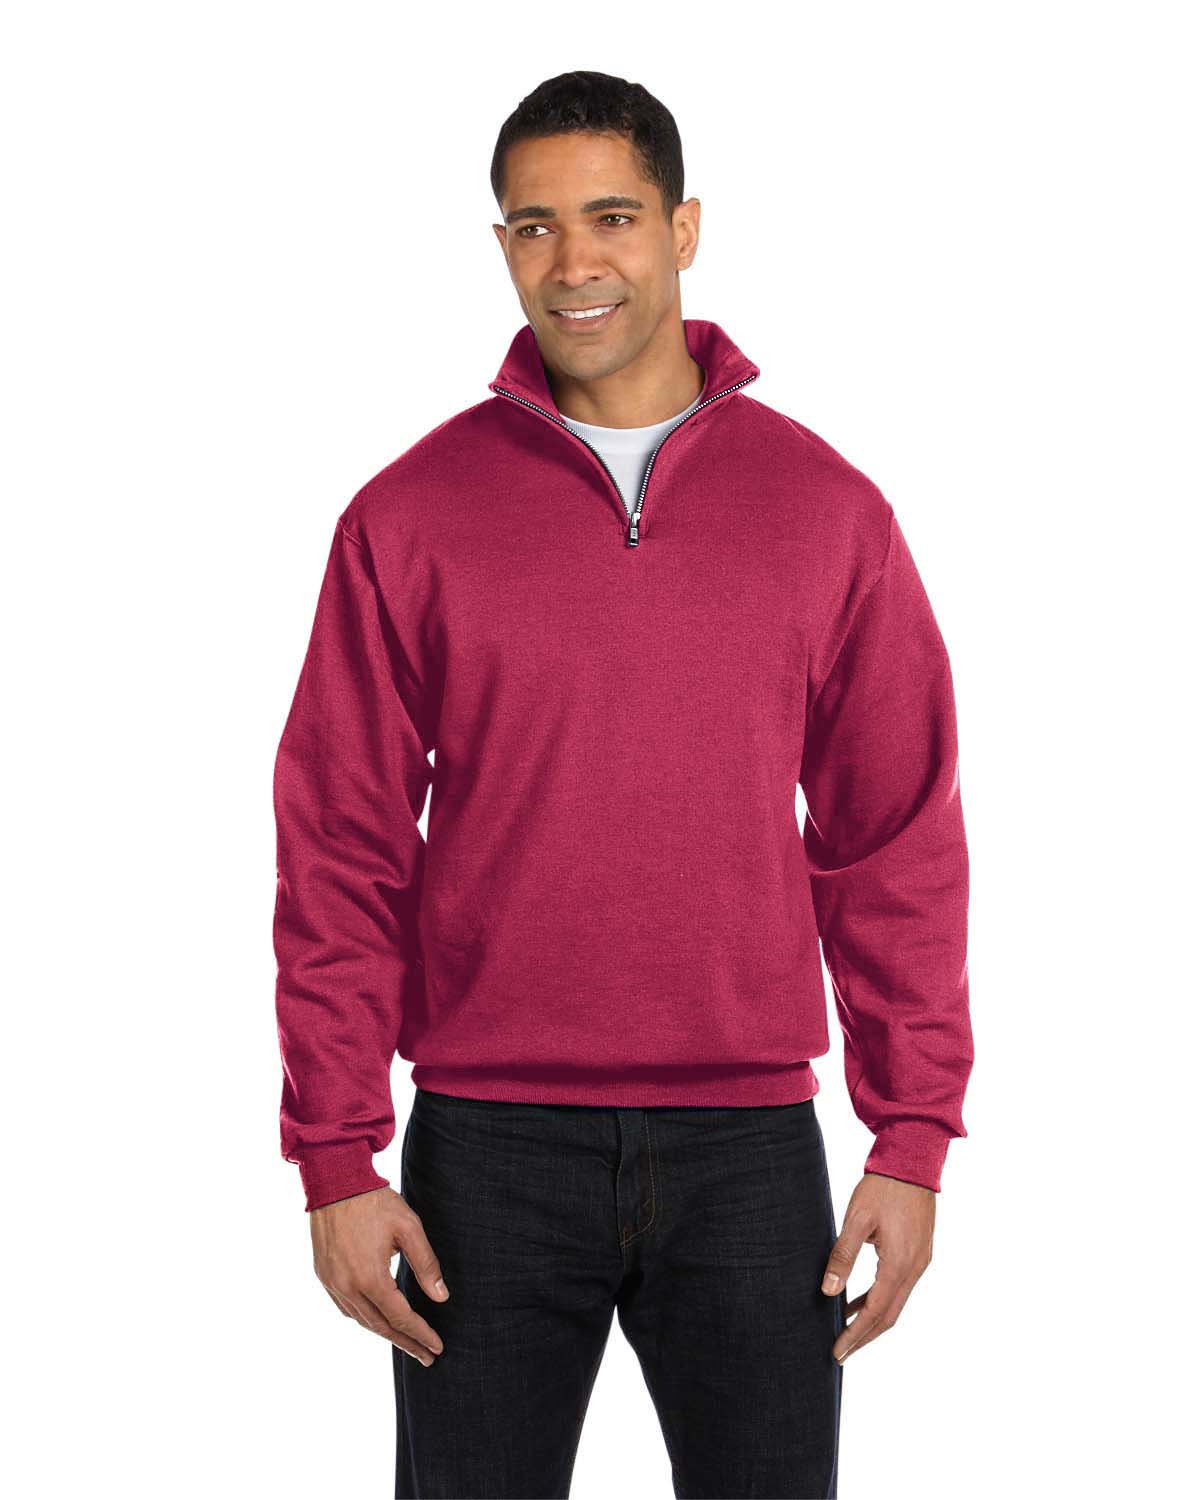 NuBlend Cadet ShirtSpace Jerzees Sweatshirt Collar 995M 1/4-Zip | | ®